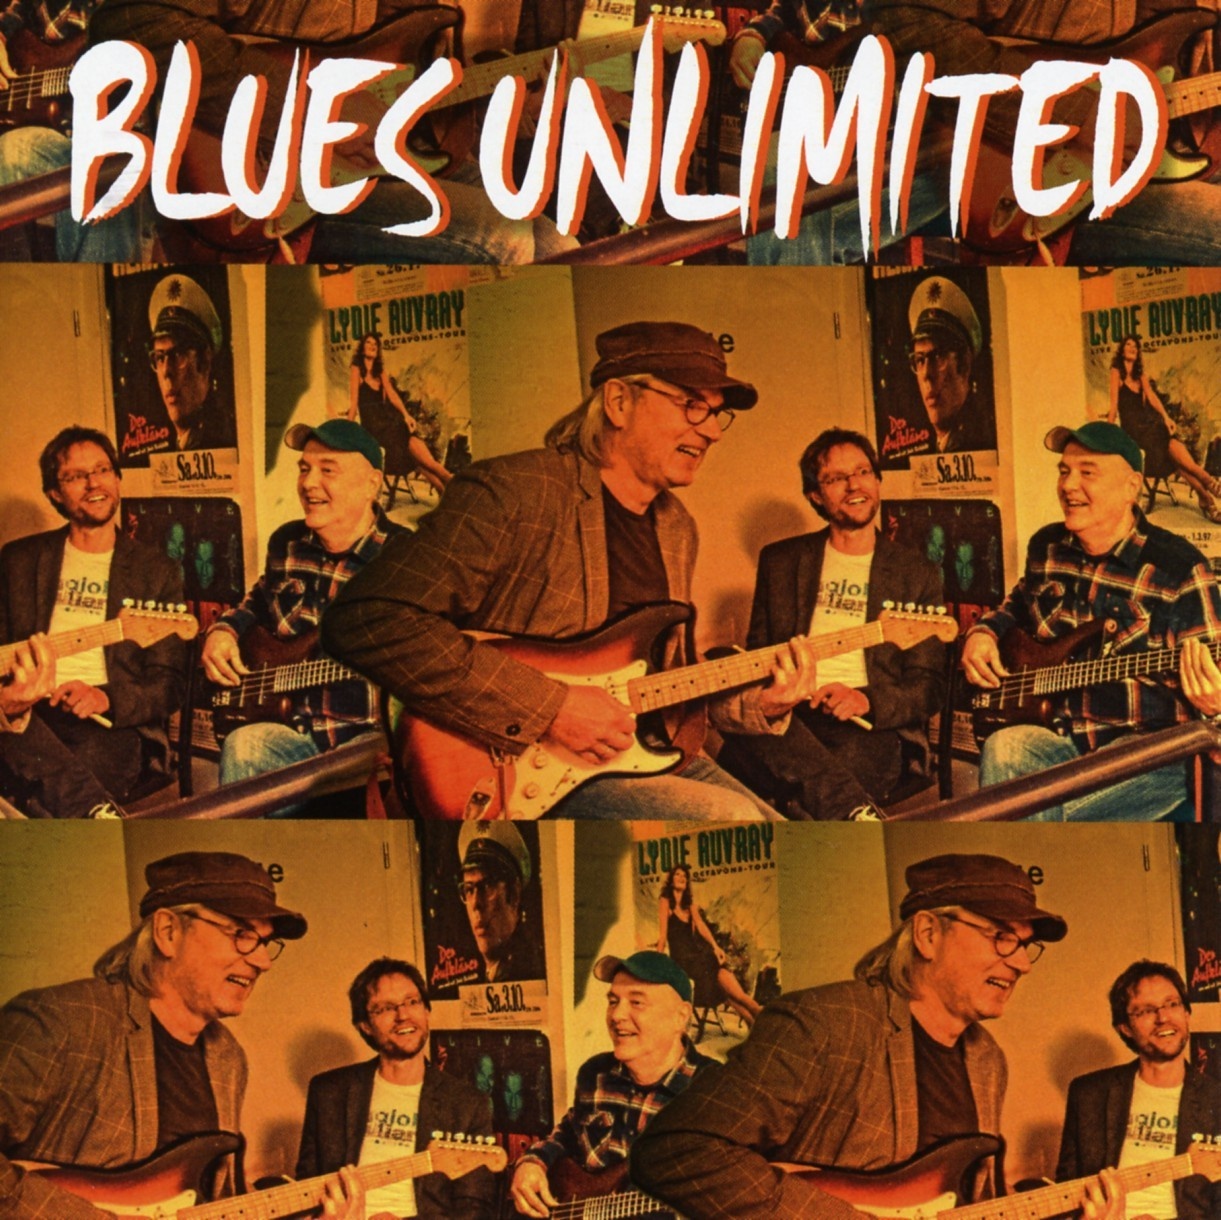 Blues Unlimited - Blues Unlimited. (CD)